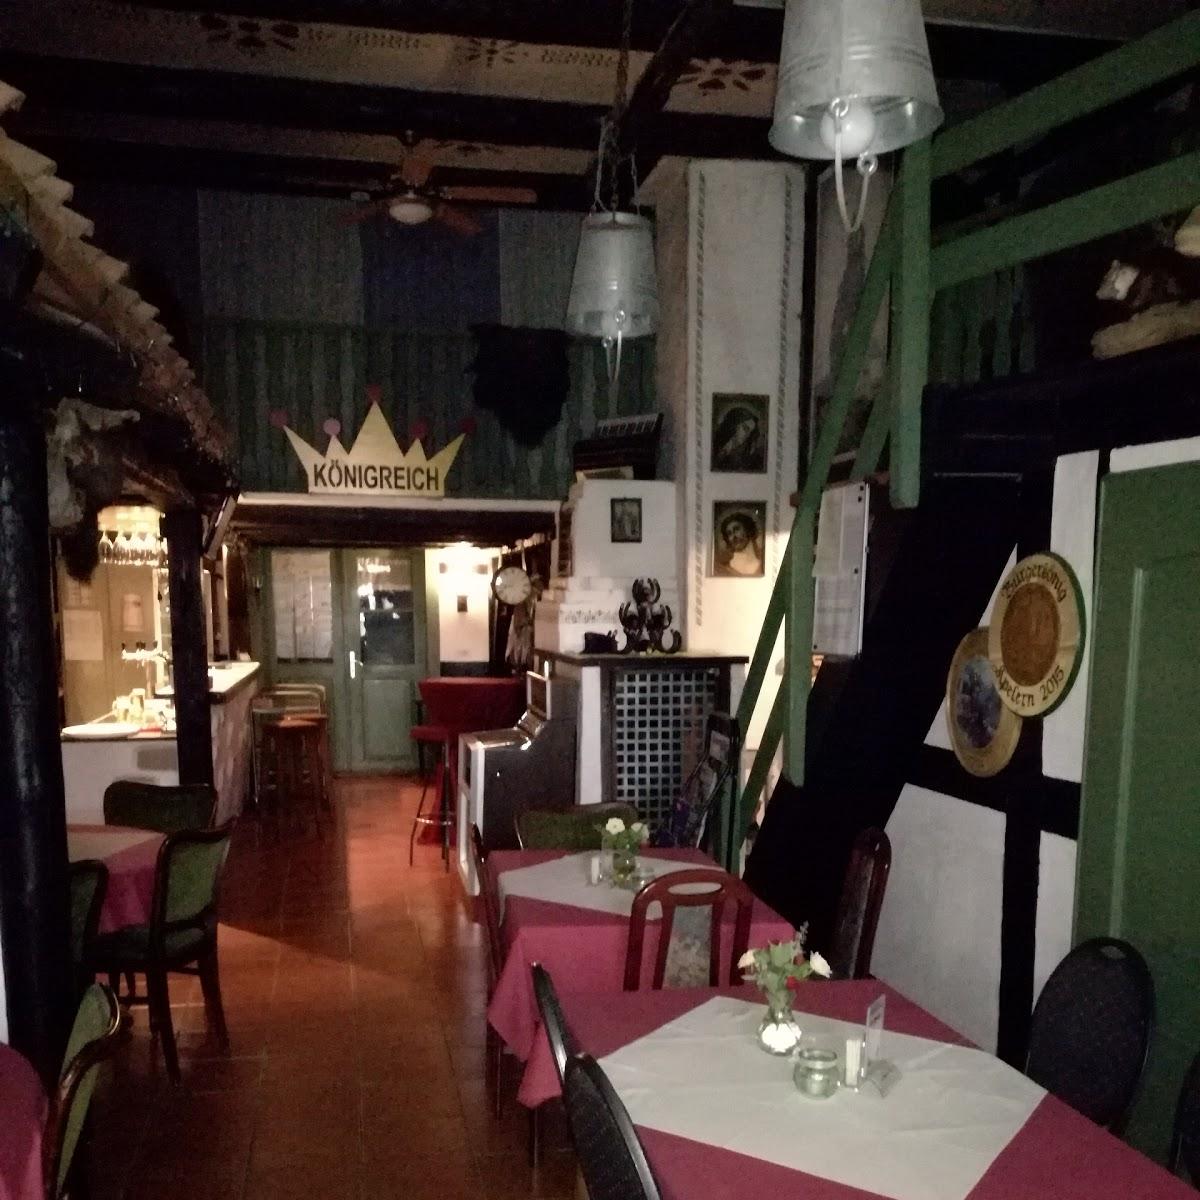 Restaurant "Cafe Anno" in Apelern